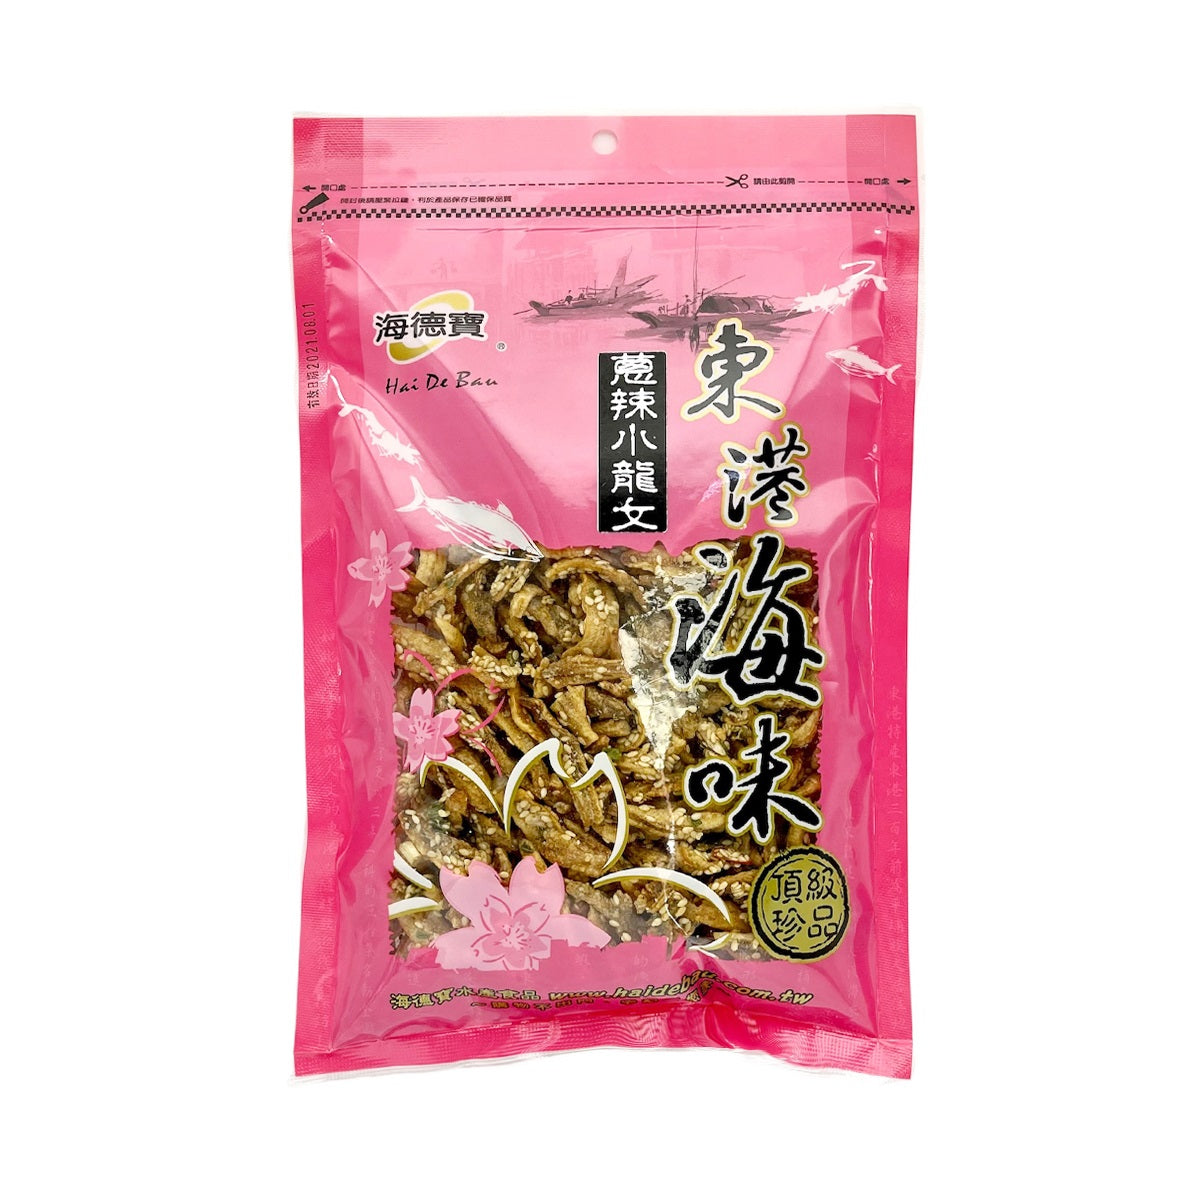 【HAI DE BAU】 East Port Dried Seasoned Fish Cracker with Sesame 160g